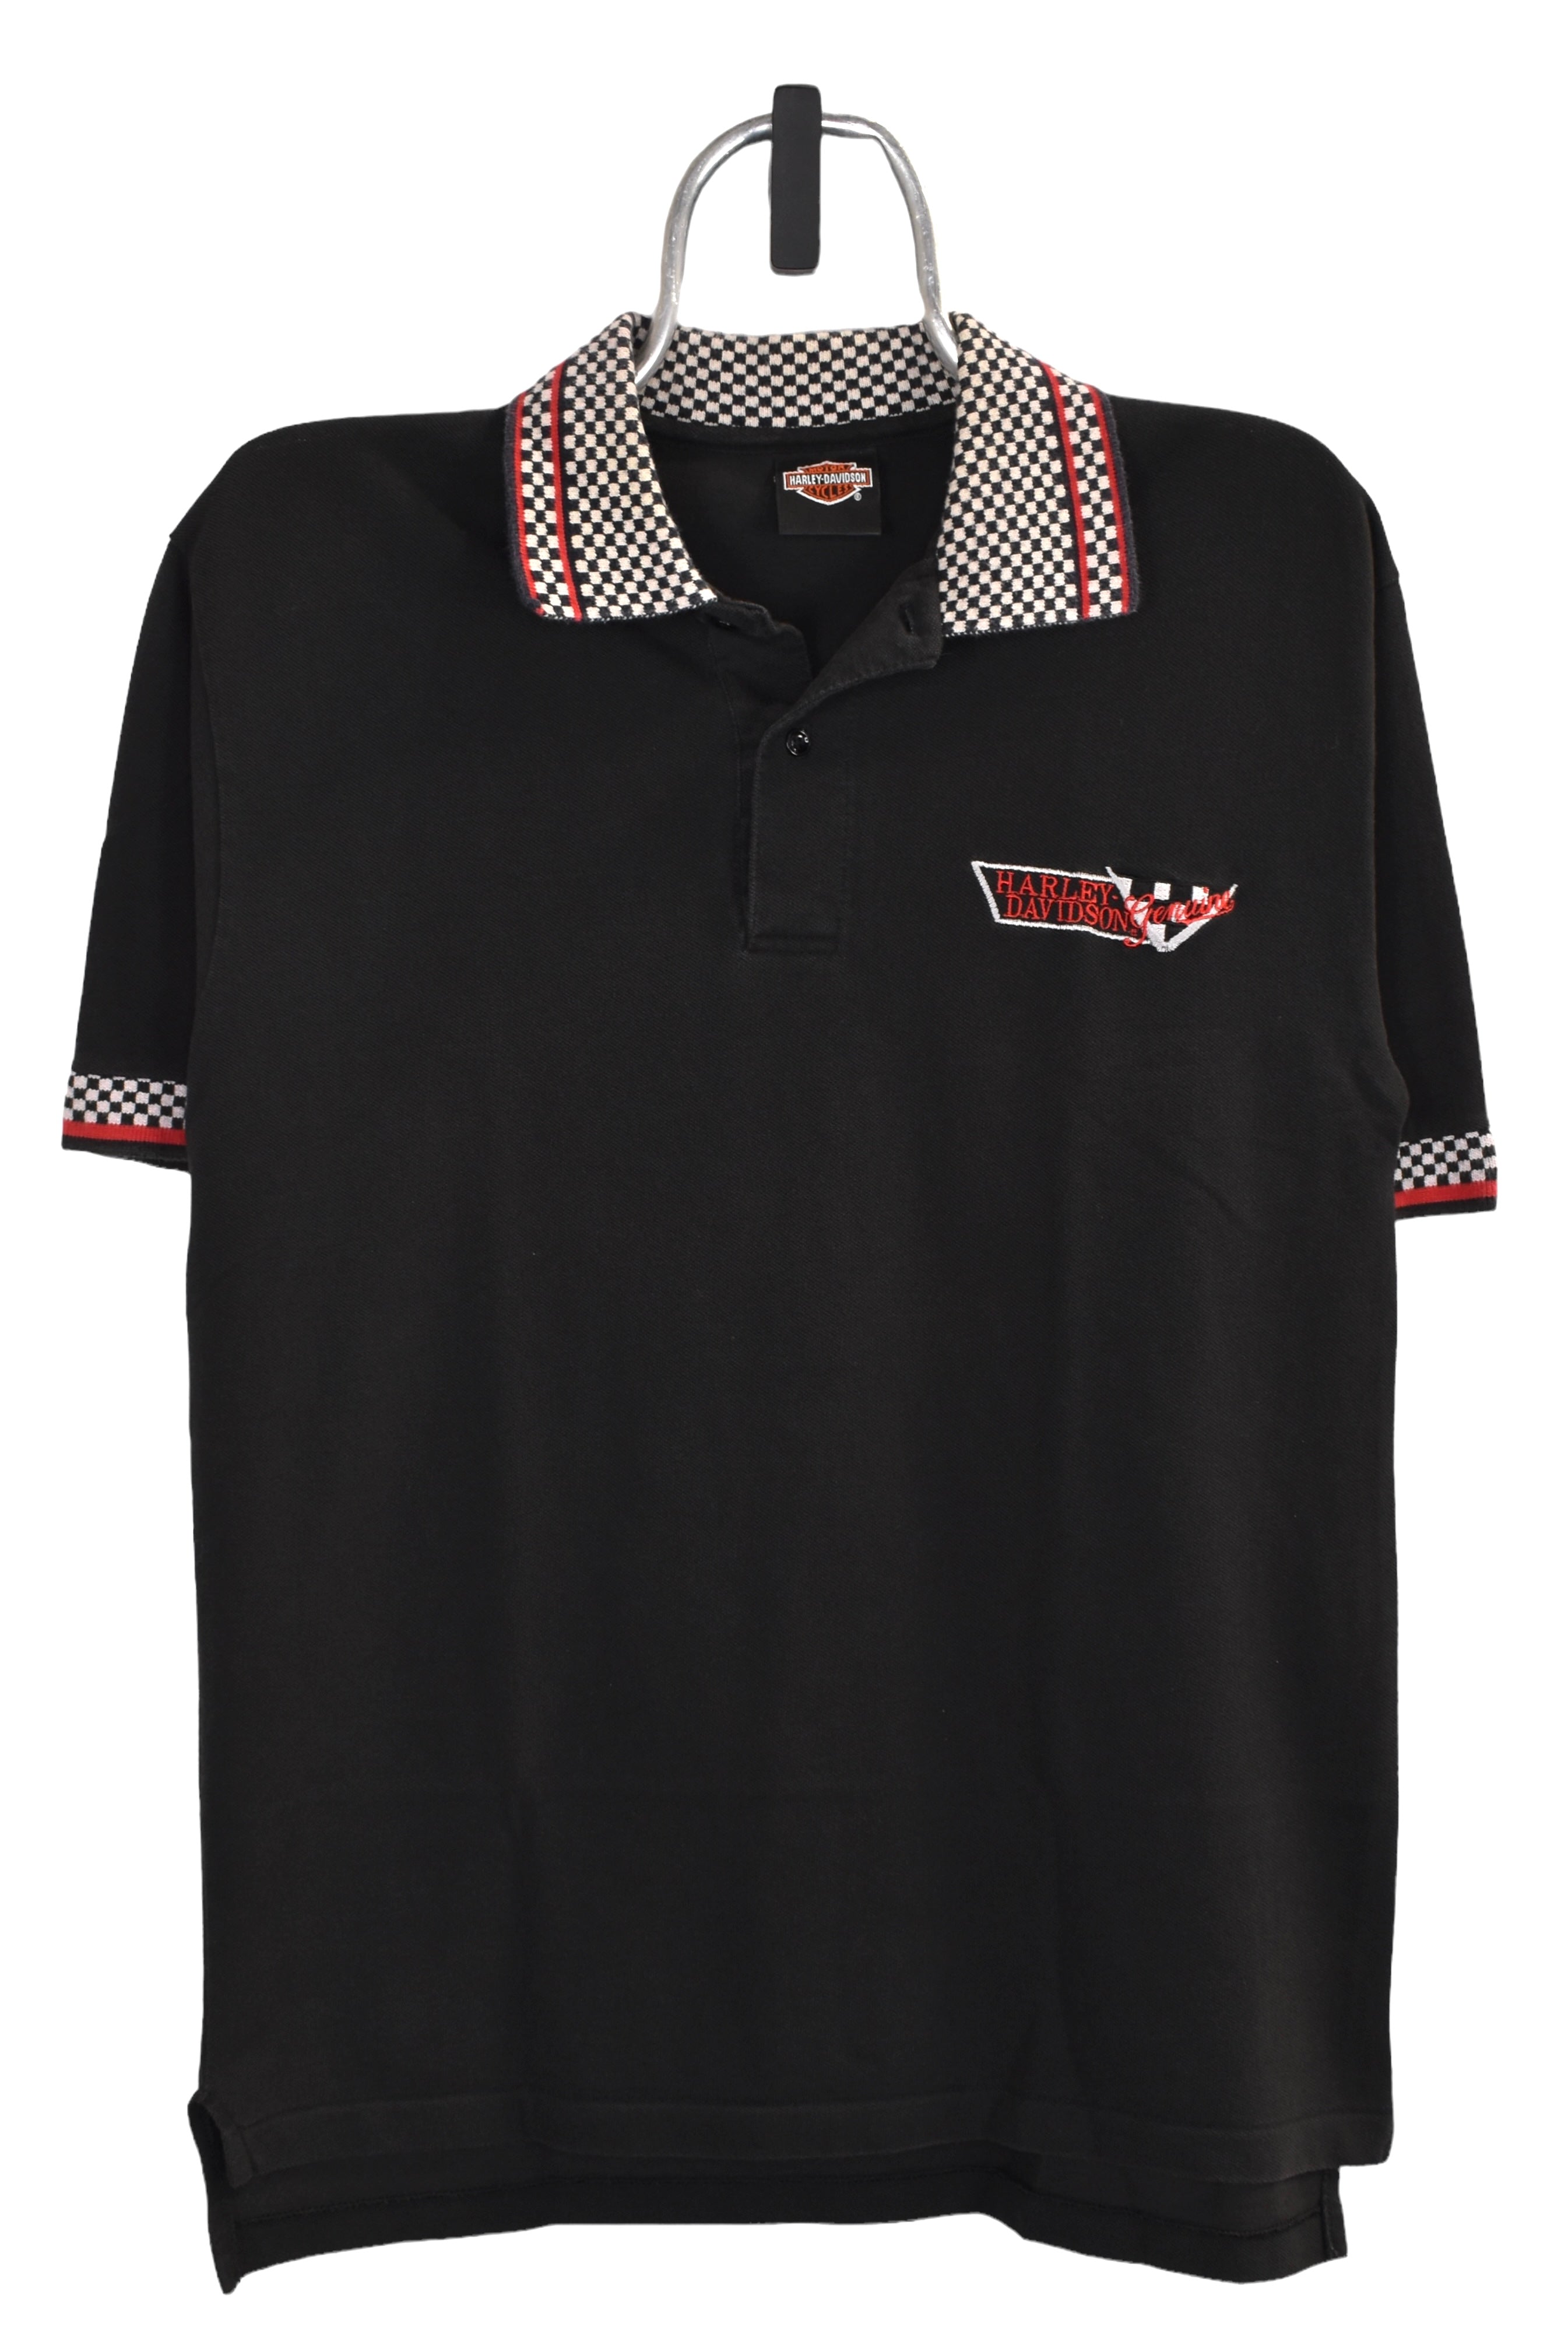 Vintage Harley Davidson polo shirt (M), black embroidered top